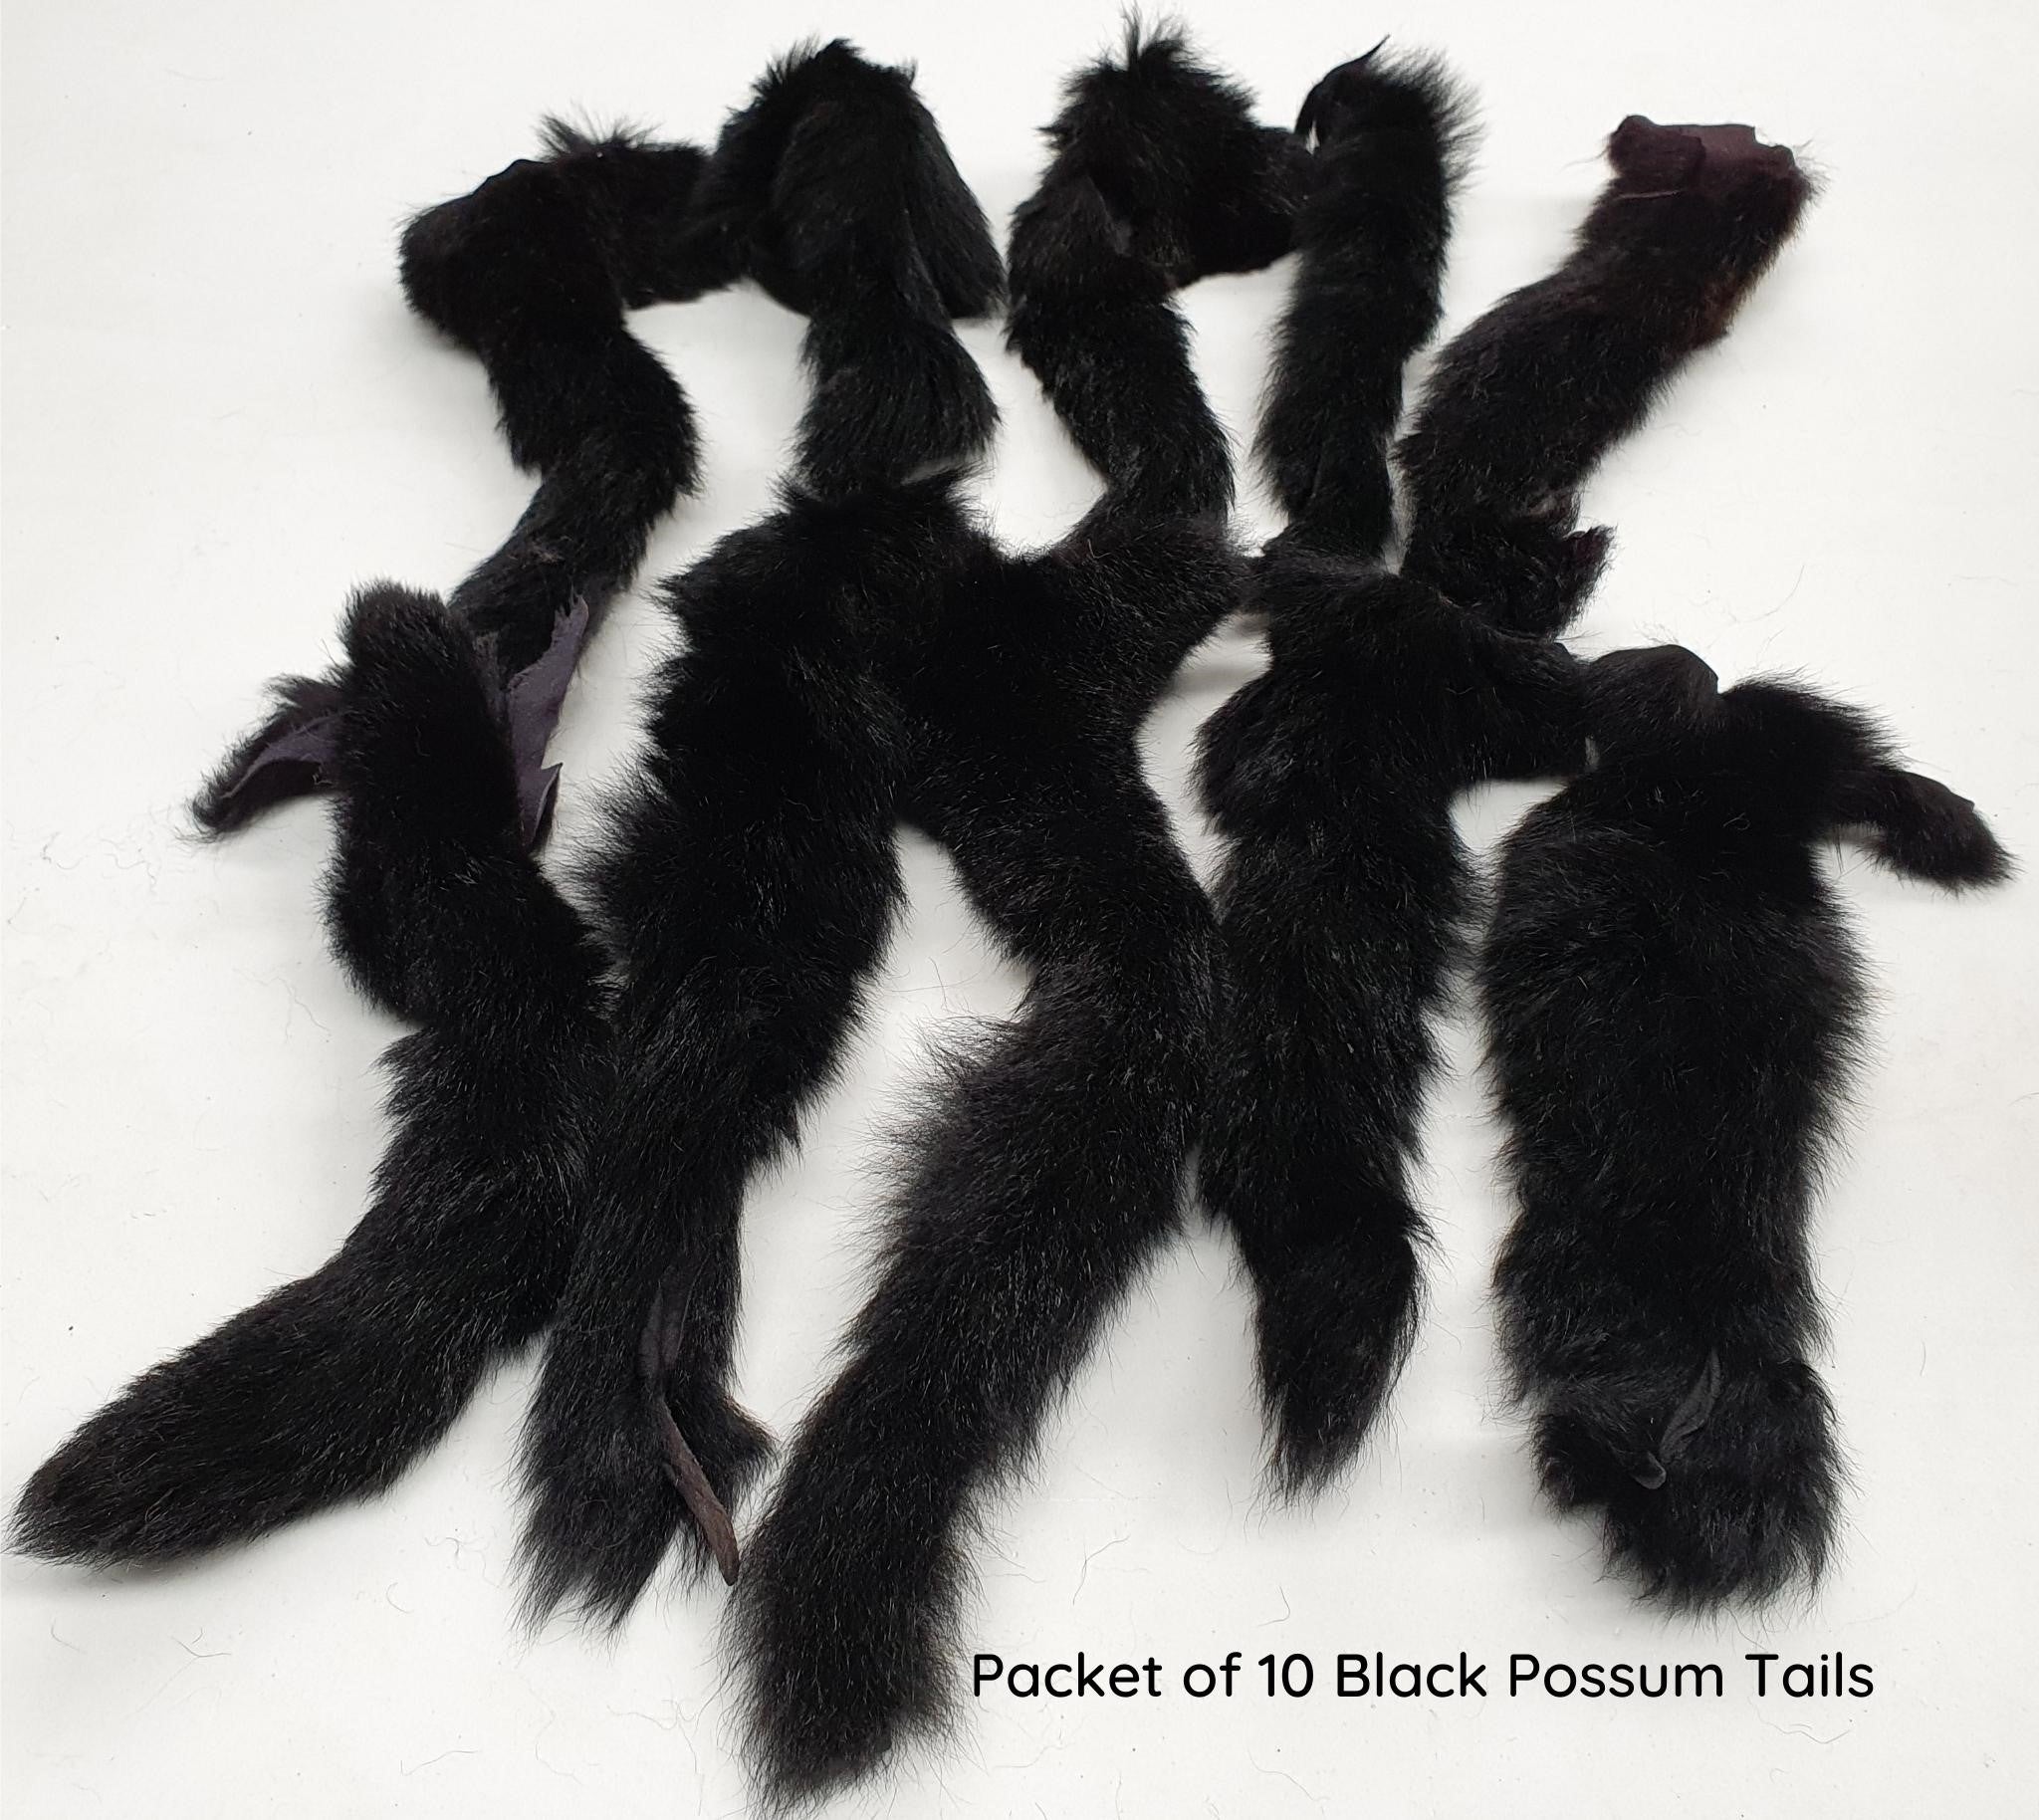 Possum Tails